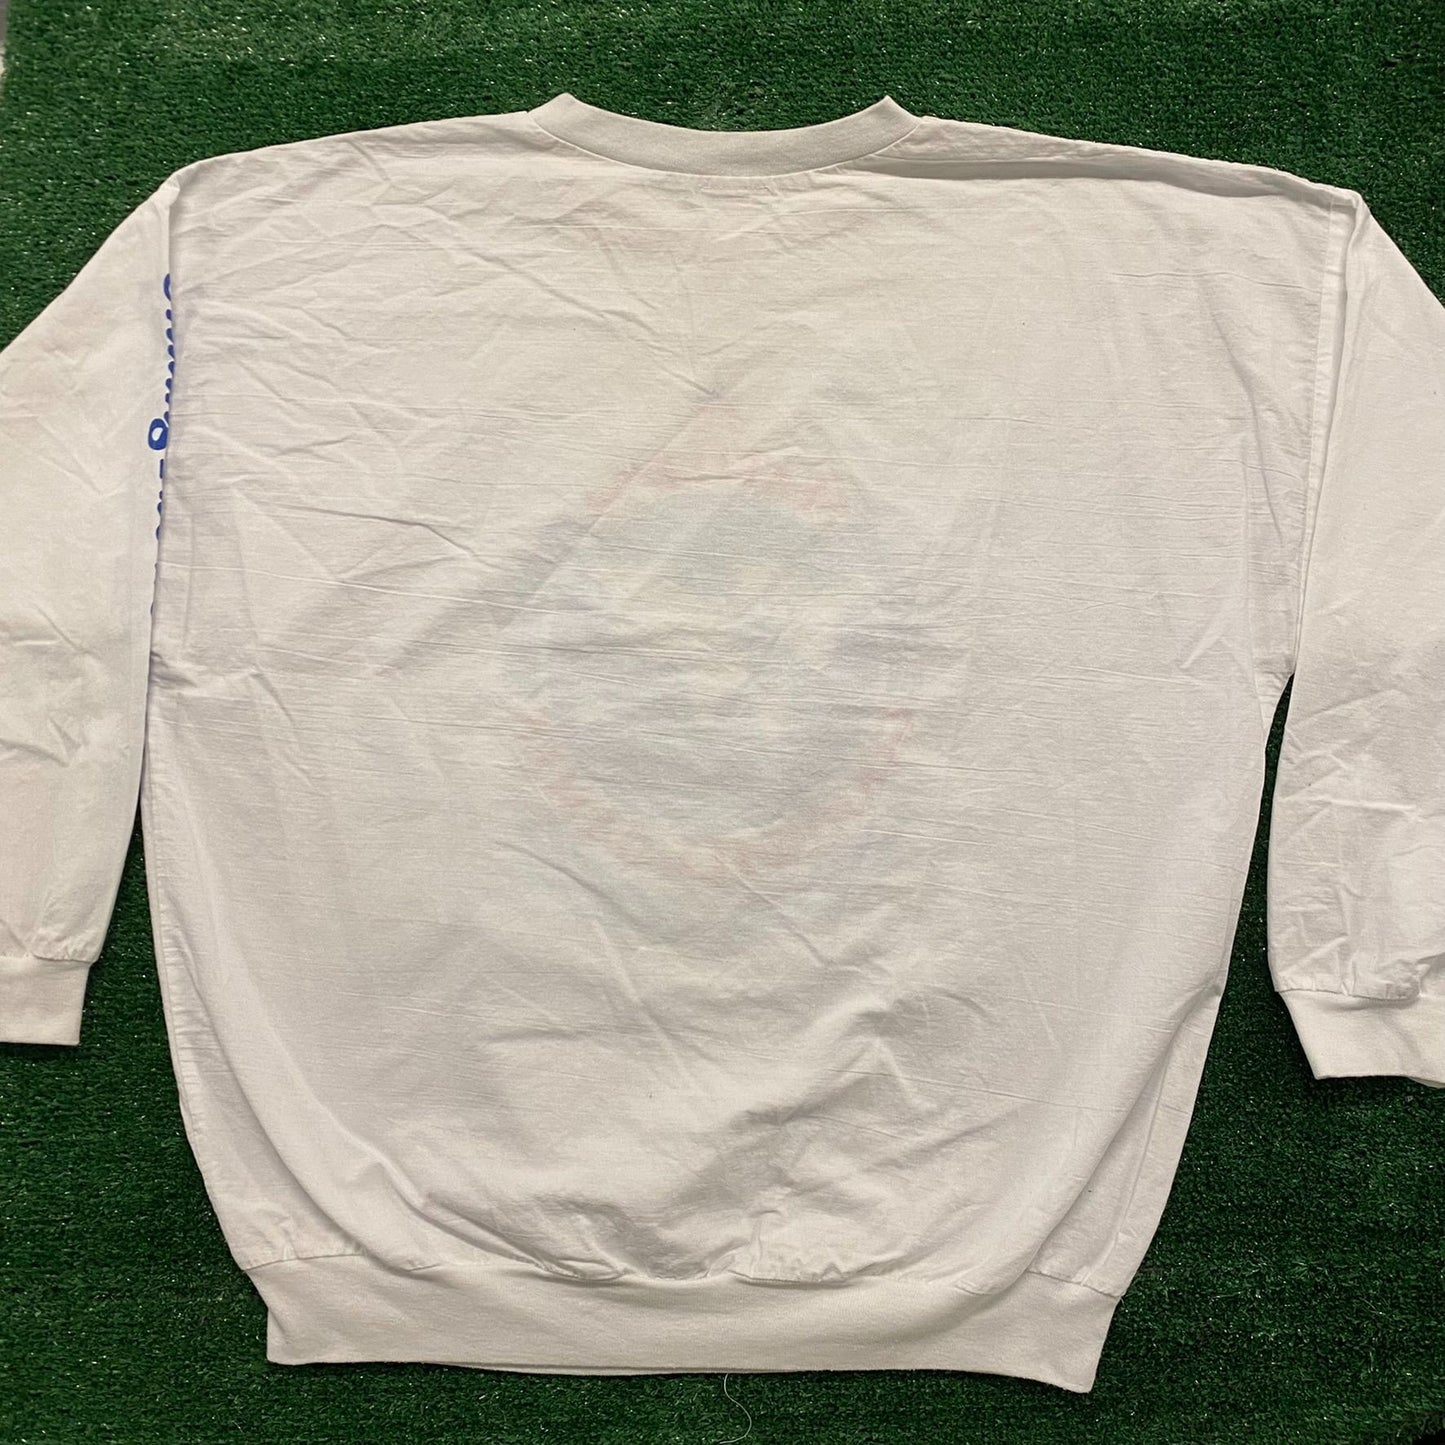 Seattle Goodwill Games Vintage 90s Crewneck Sweatshirt